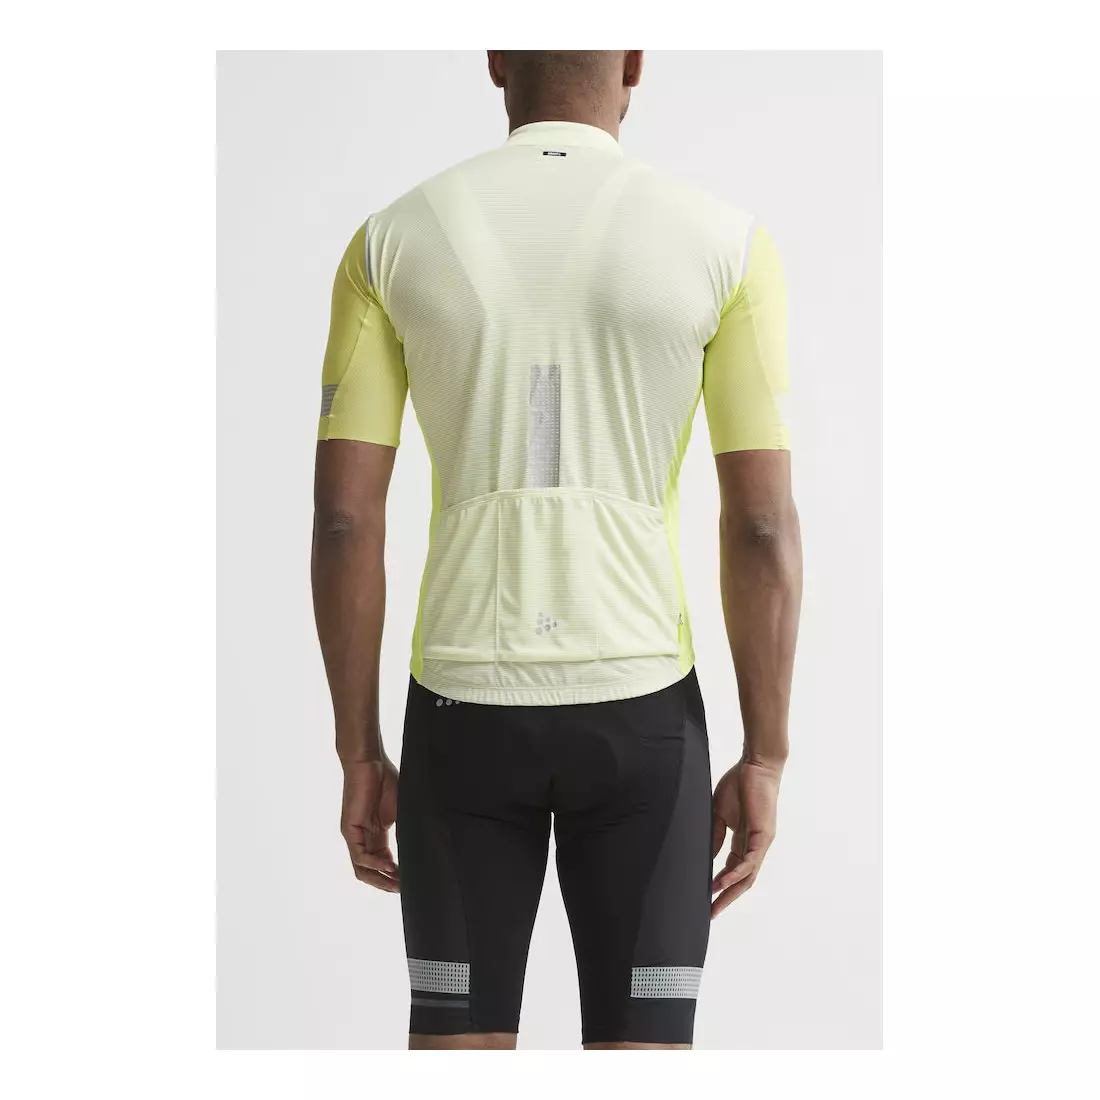 CRAFT HALE GLOW men's cycling jersey 1907148-851926